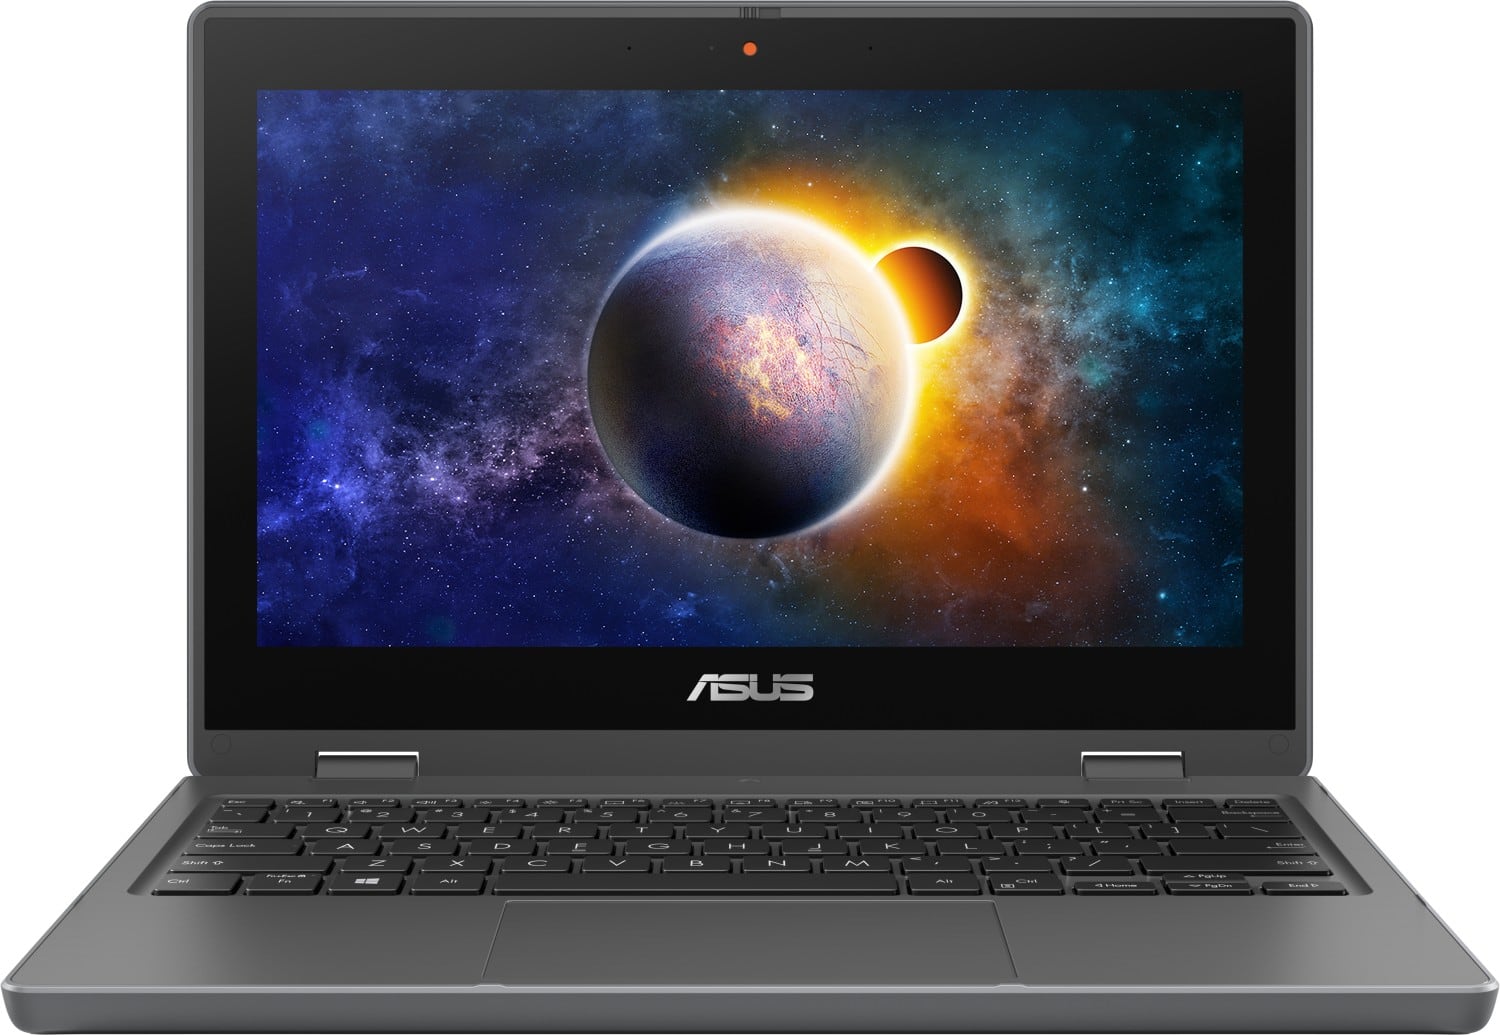 ASUS Flip Design 11,6" HD Touchscreen | Intel Celeron N4500 | 4GB RAM | 64GB eMMC | Windows 10 Pro Education | Convertible Notebook | ! Ausstellungsgerät !